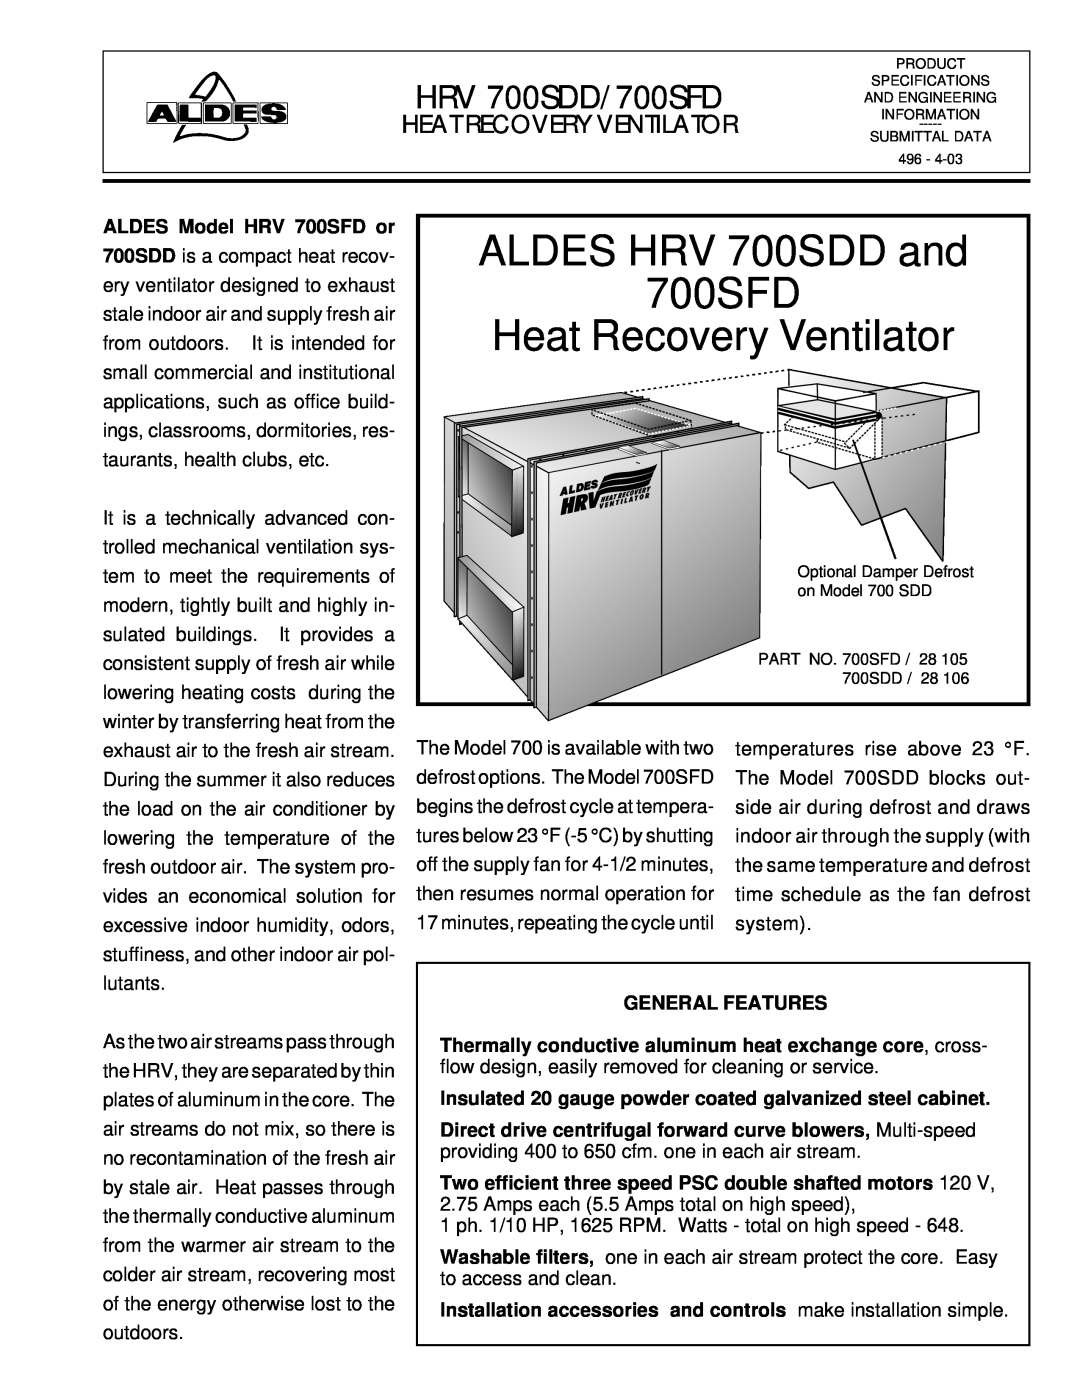 American Aldes HRV 700SFD manual ALDES HRV 700SDD and, Heat Recovery Ventilator, HRV 700SDD/700SFD 